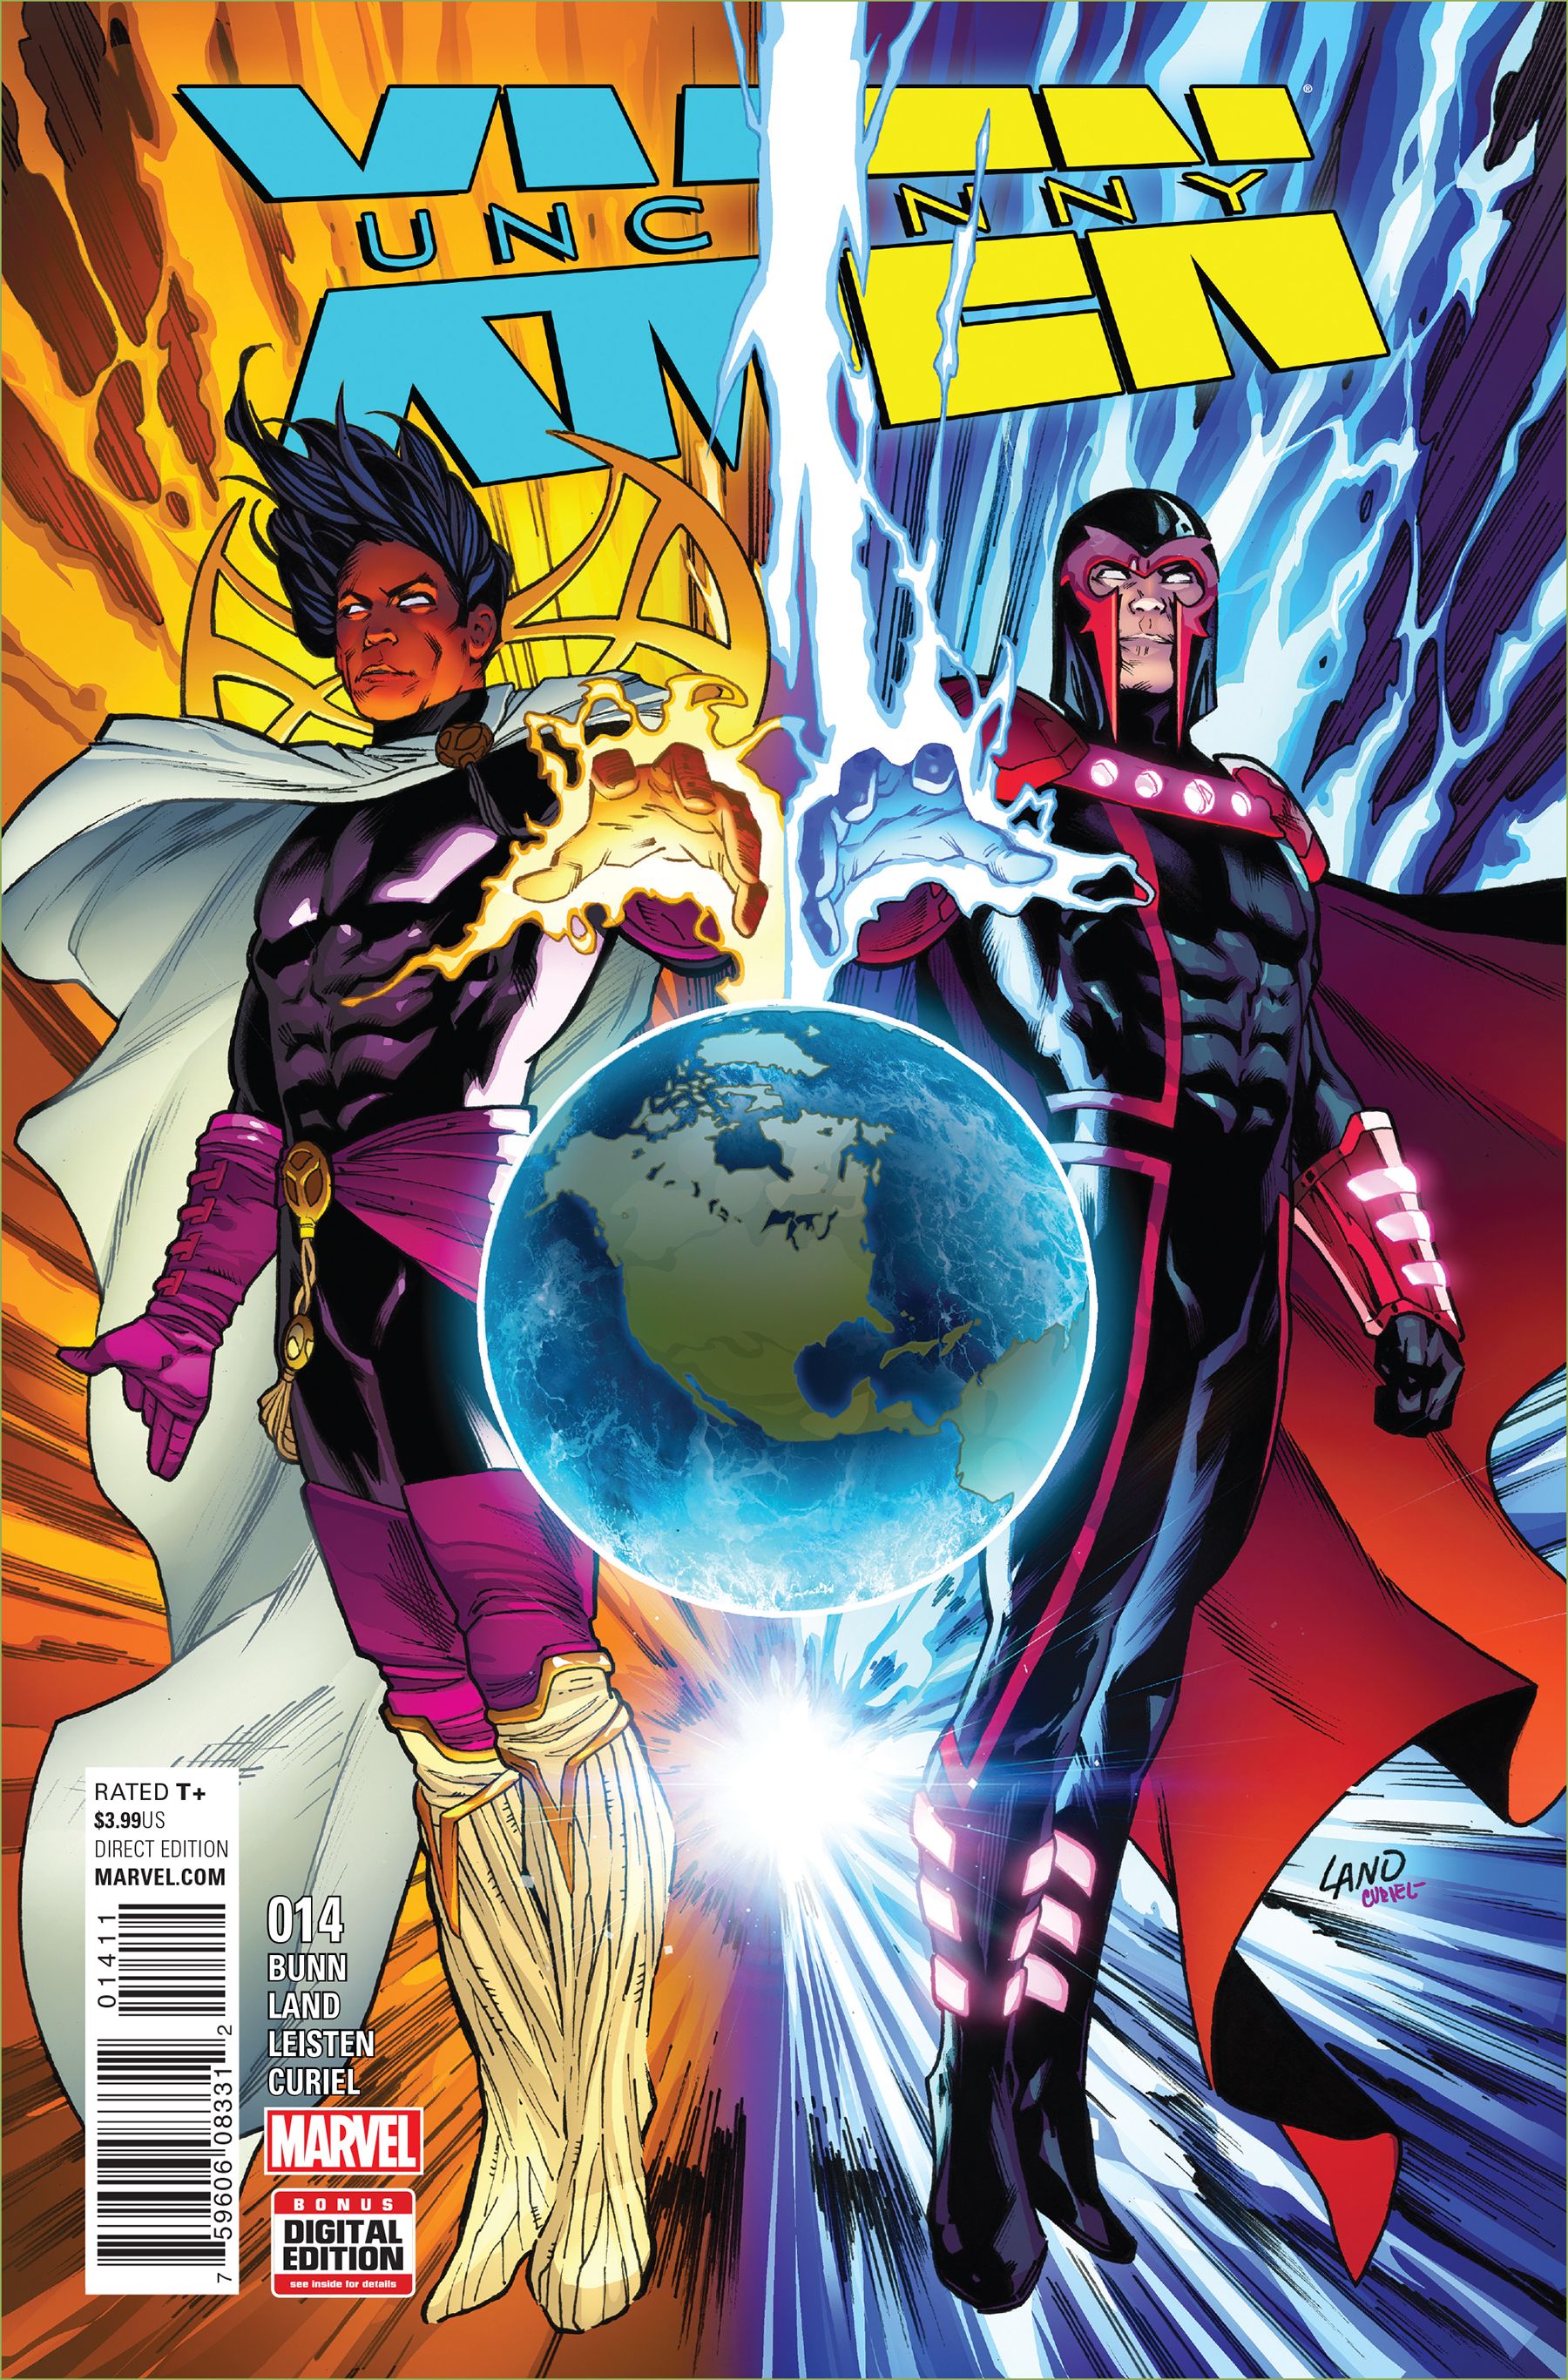 Uncanny X-Men #14 cover by Greg Land and Nolan Woodard